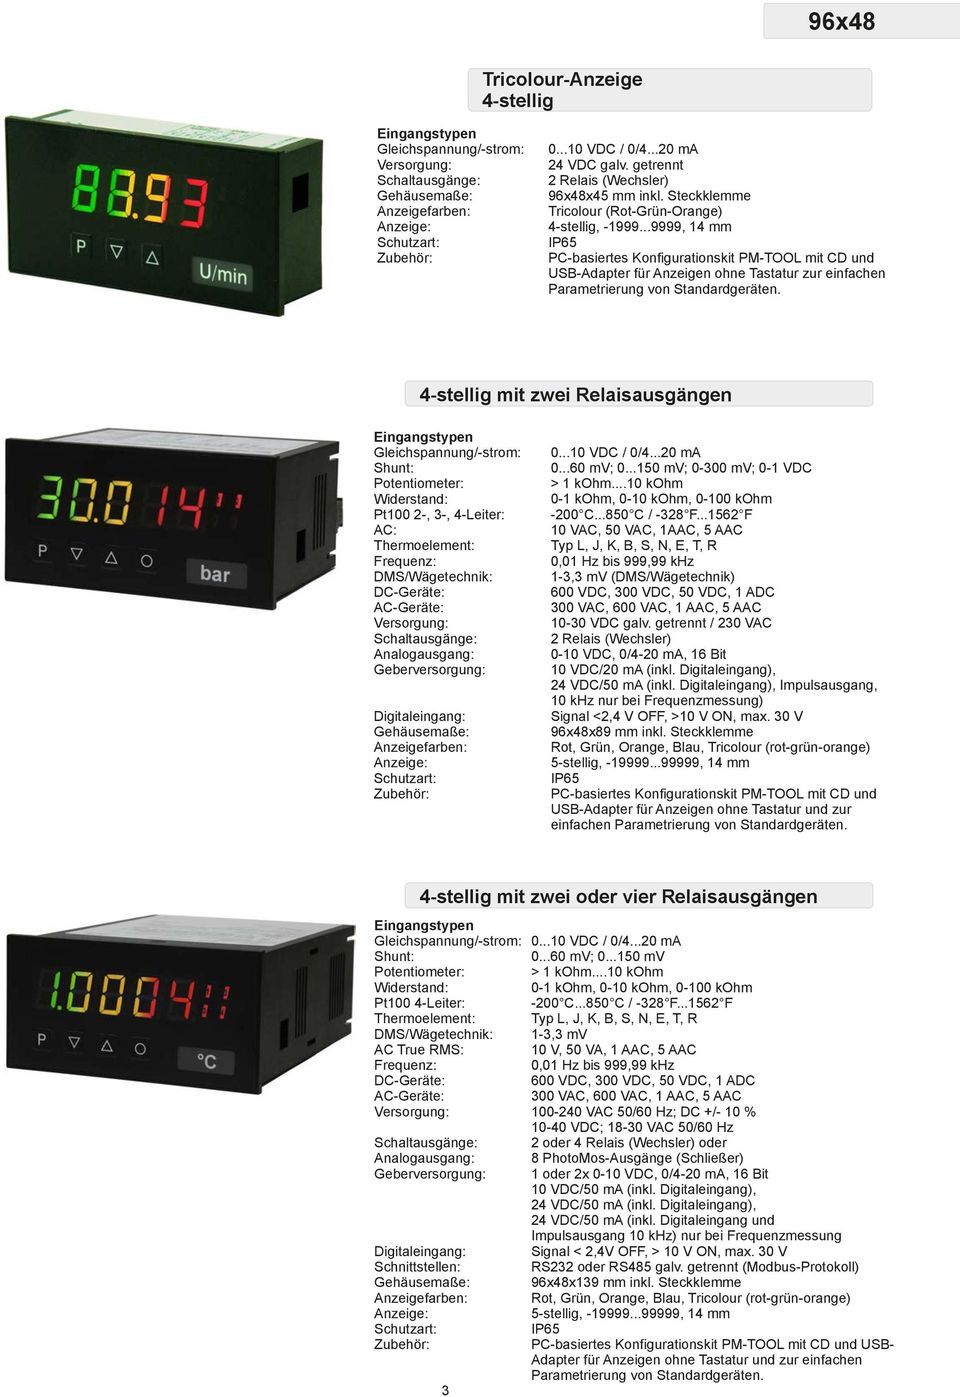 4-Leiter: AC: DMS/Wägetechnik: DC-Geräte: AC-Geräte: 0...60 mv; 0.